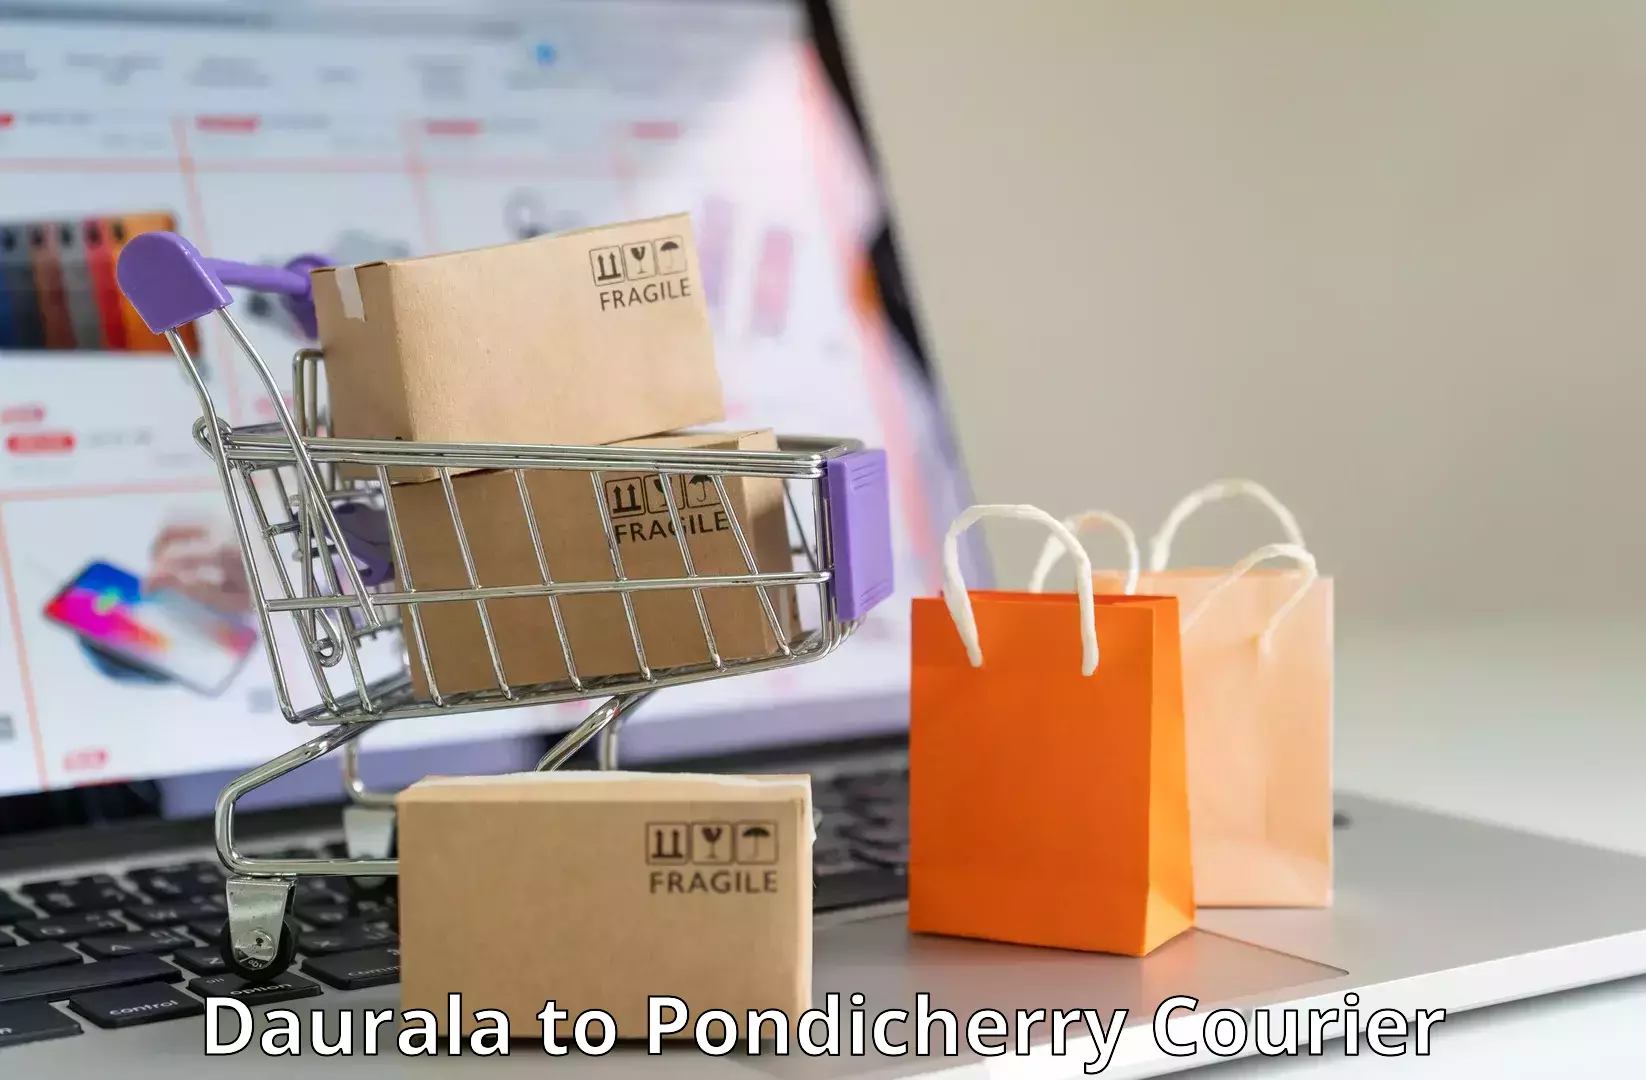 Multi-service courier options Daurala to Pondicherry